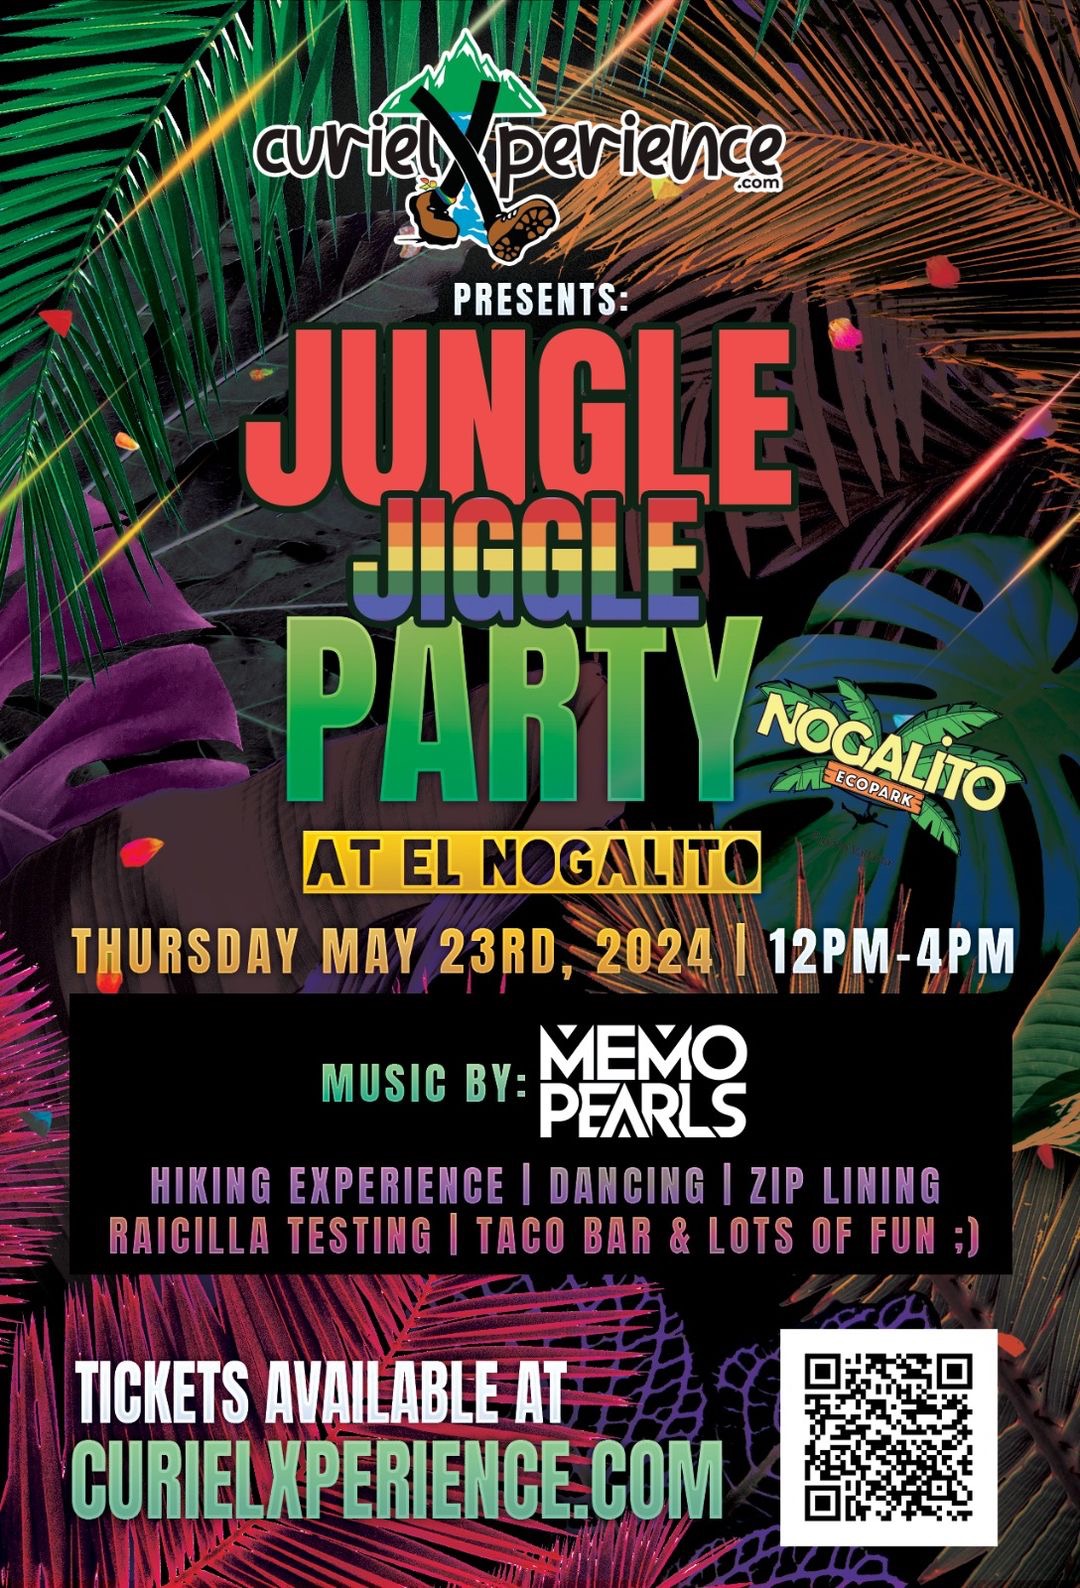 Jungle Jiggle Party